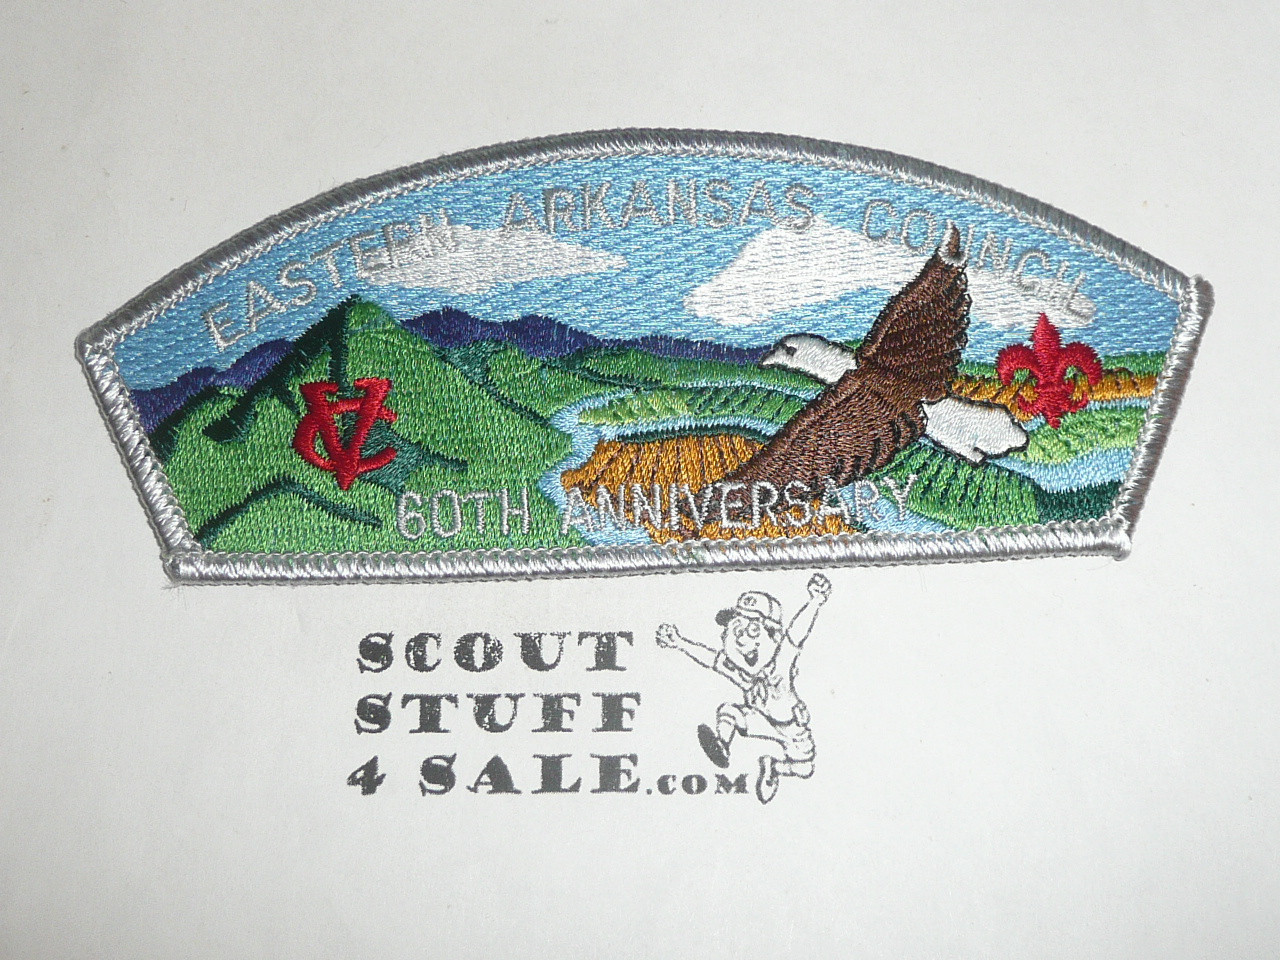 Eastern Arkansas Council s6 CSP - Scout